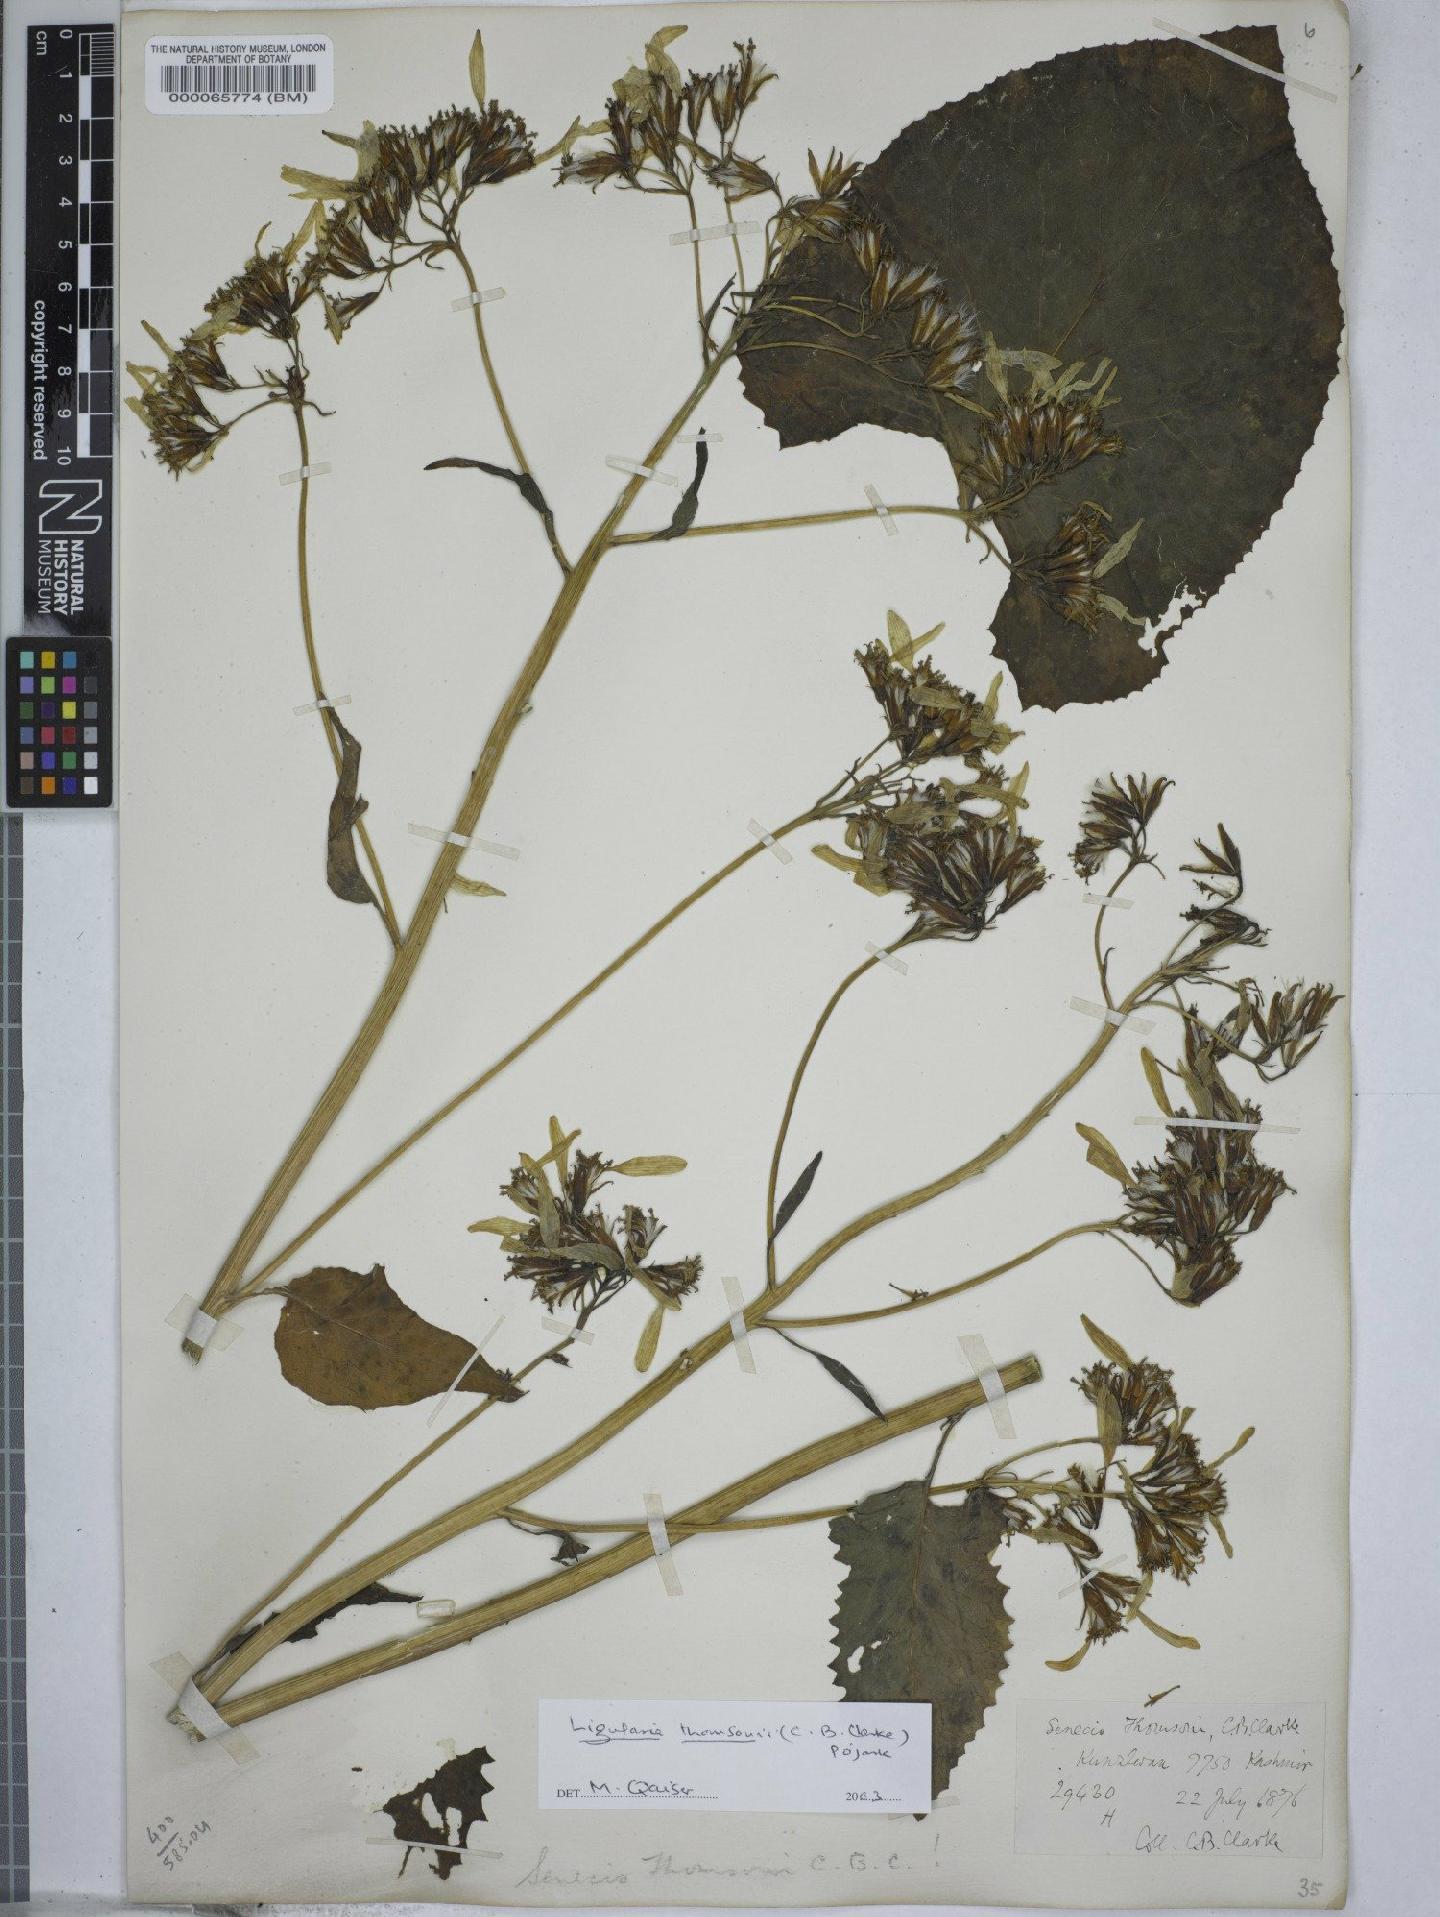 To NHMUK collection (Ligularia thomsonii (C.B.Clarke) Pojark; NHMUK:ecatalogue:9149380)